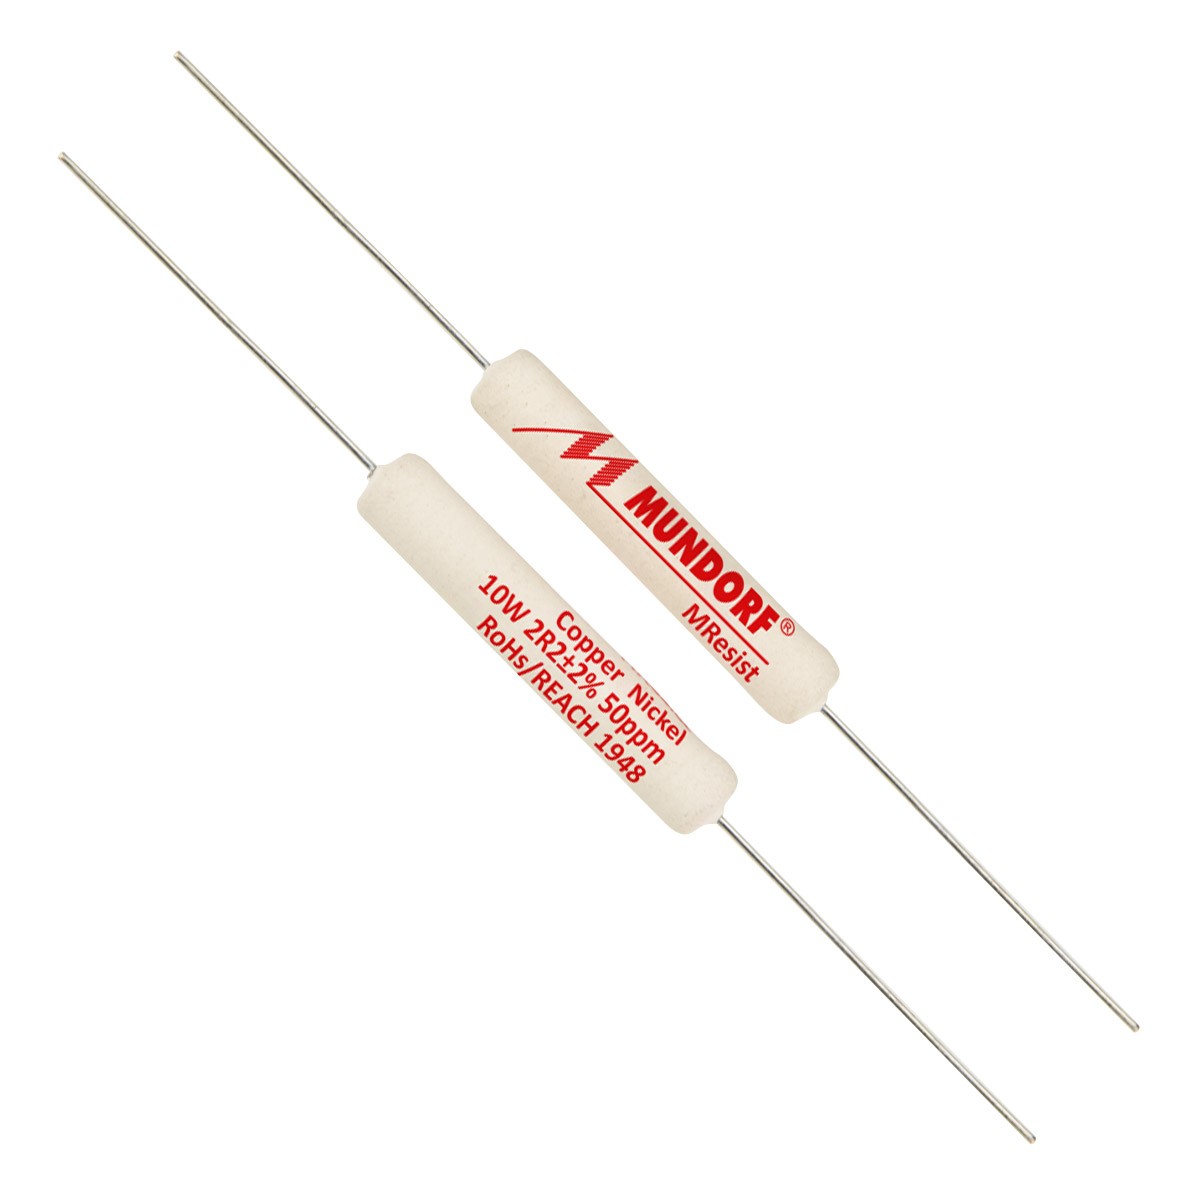 MUNDORF MRESIST CLASSIC Resistor 10W 3.9 Ohm